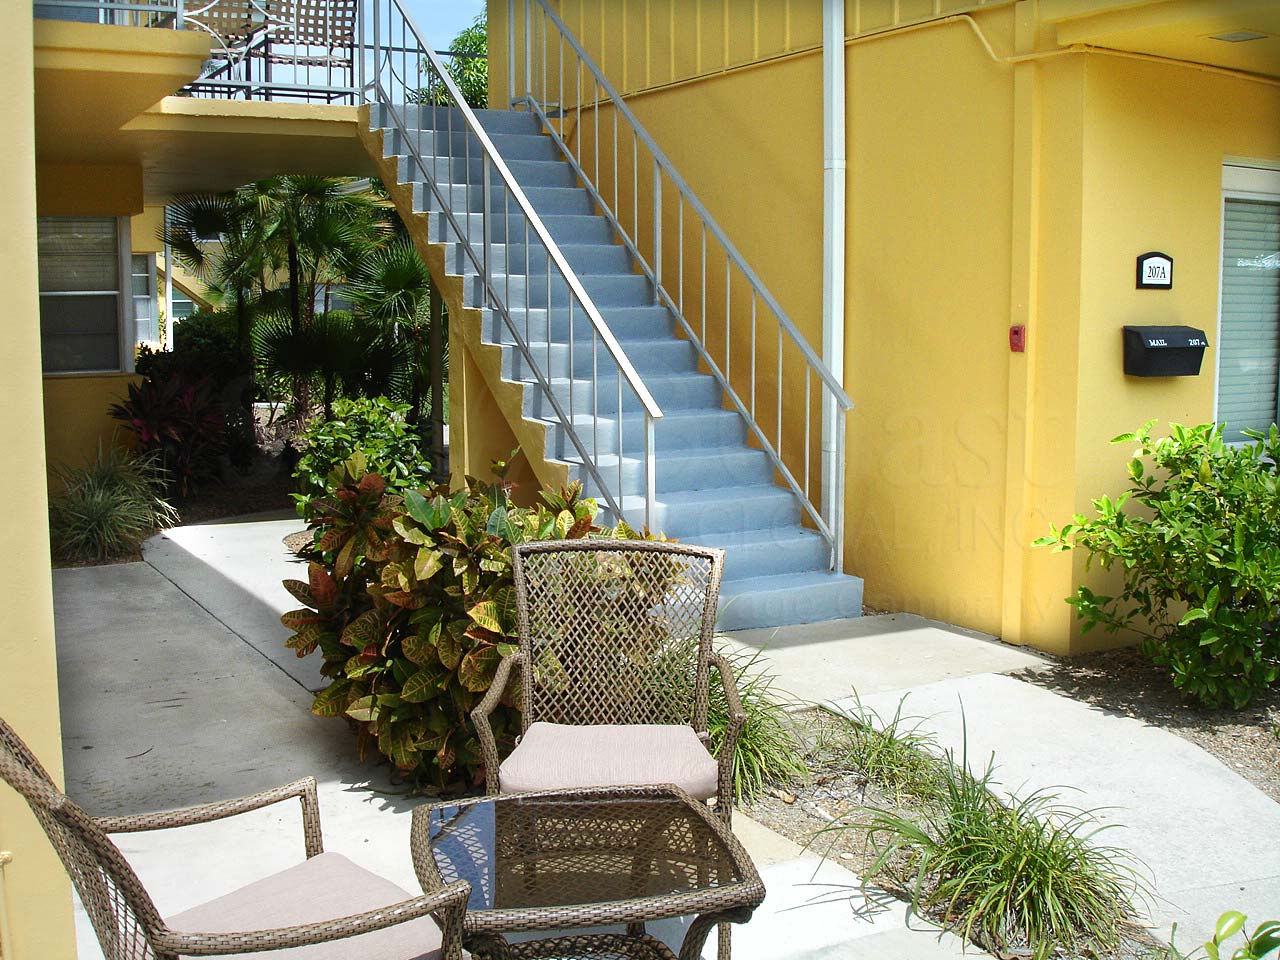 Garden Manor Stairway